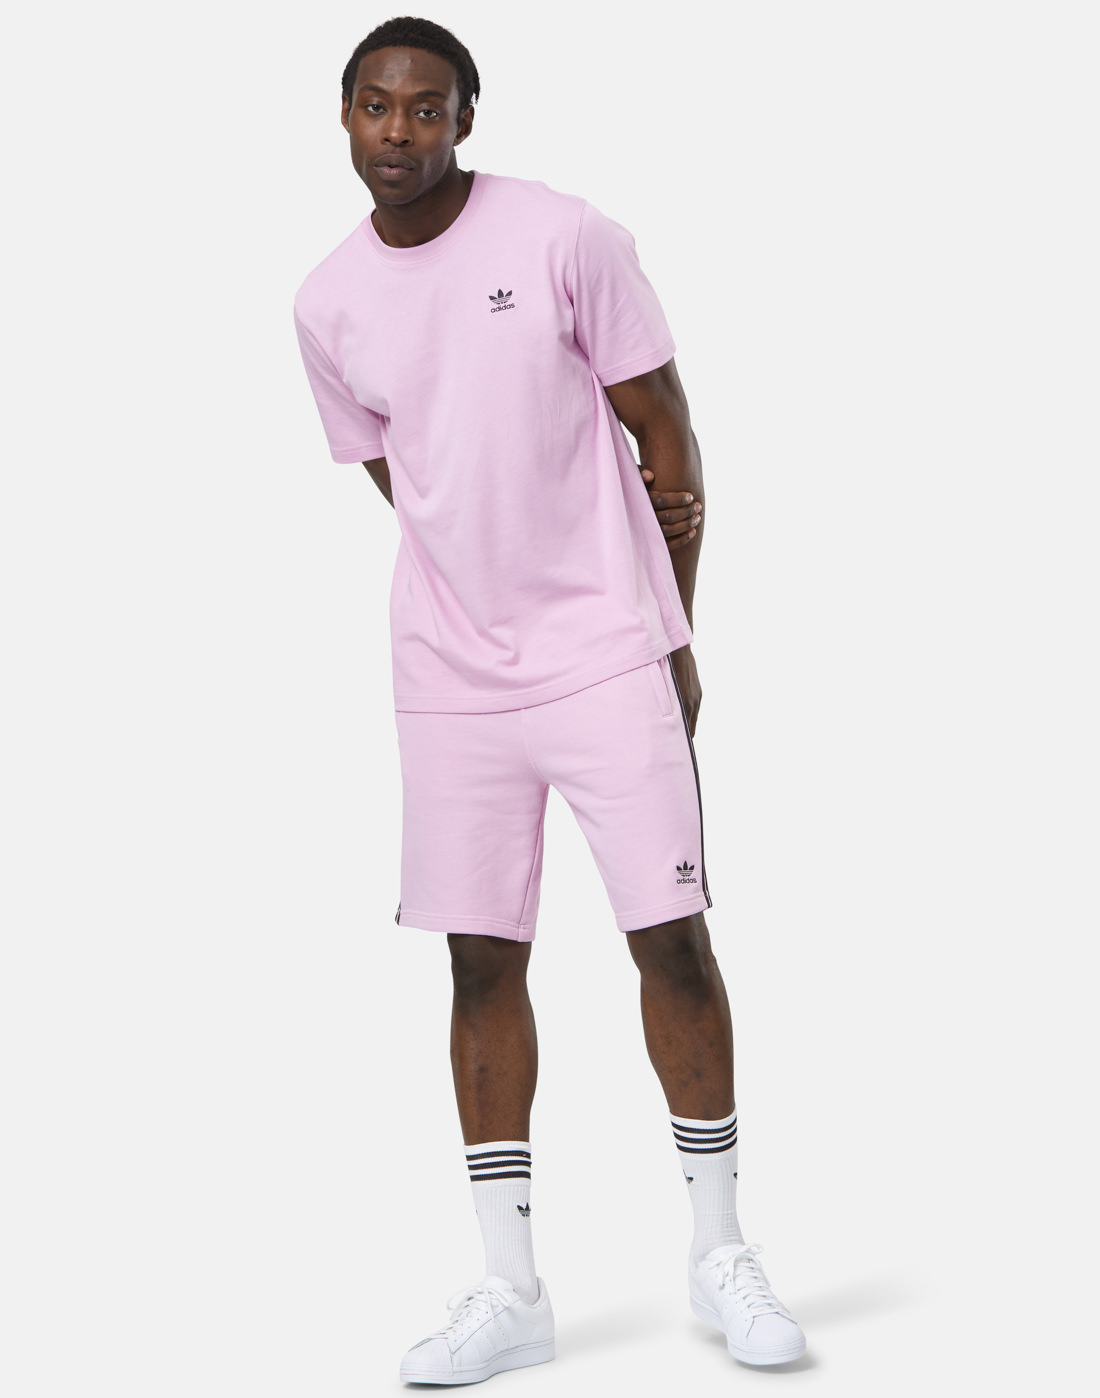 Originals UK Style | - Pink Print Life Back Sports adidas Mens Trefoil T-Shirt